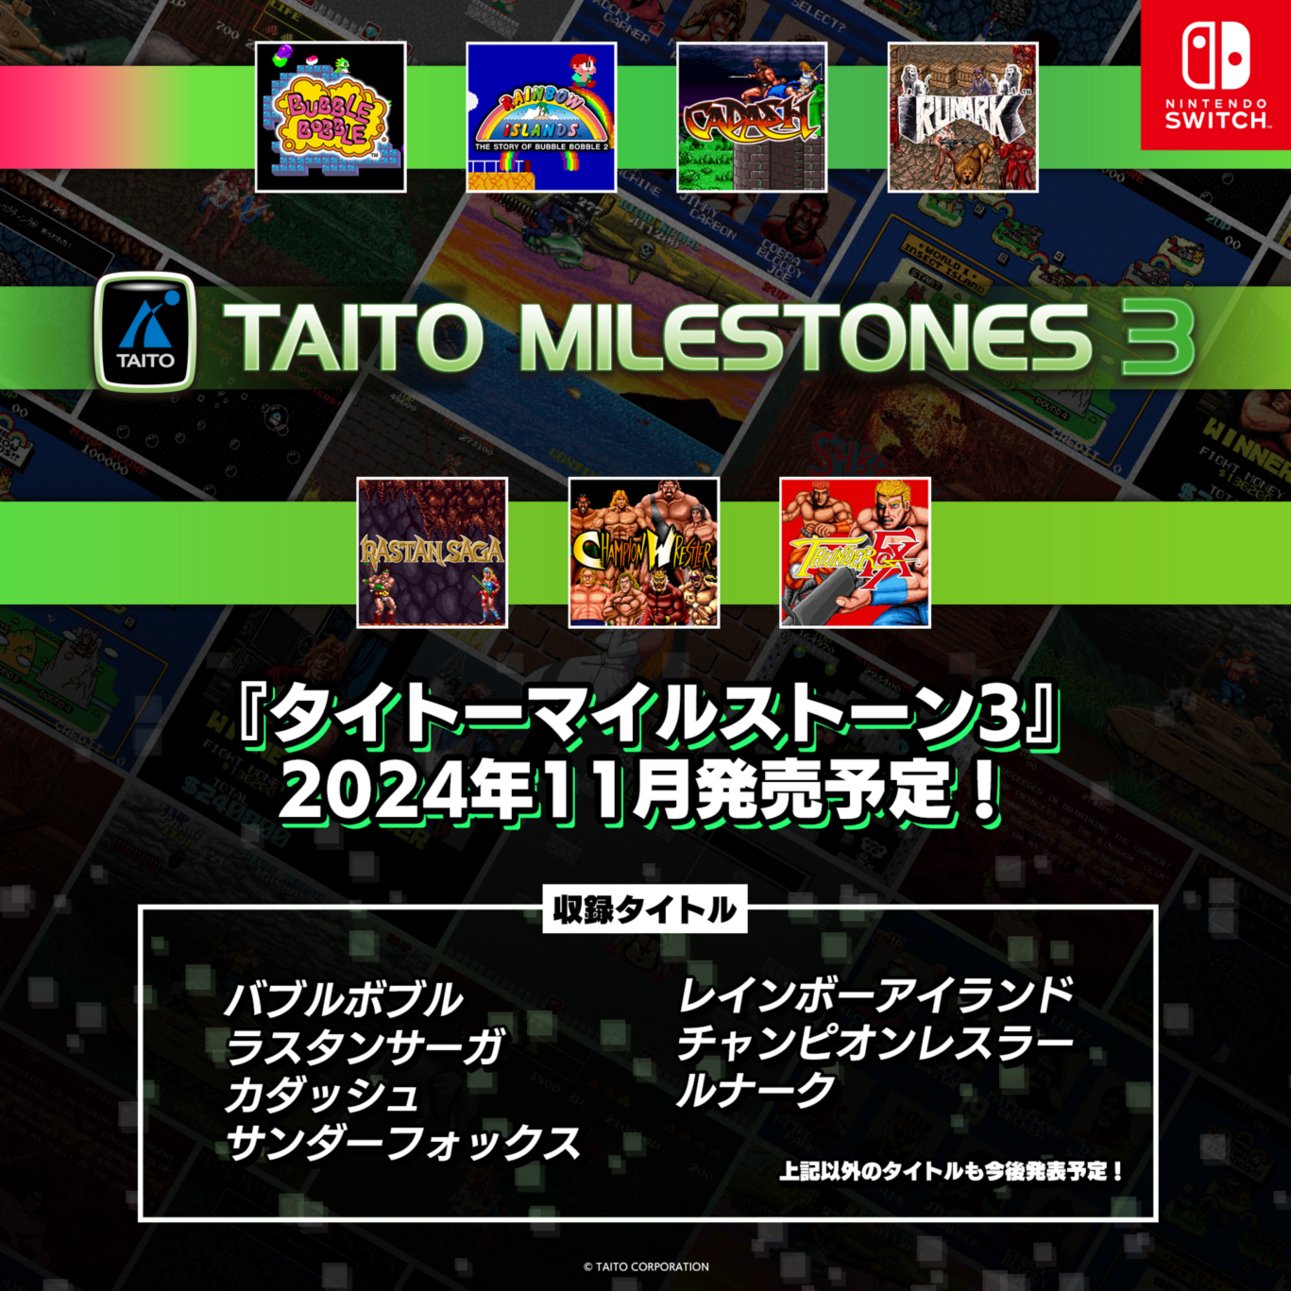 taito-milestone-3-for-nintendo-switch-title-lineup1